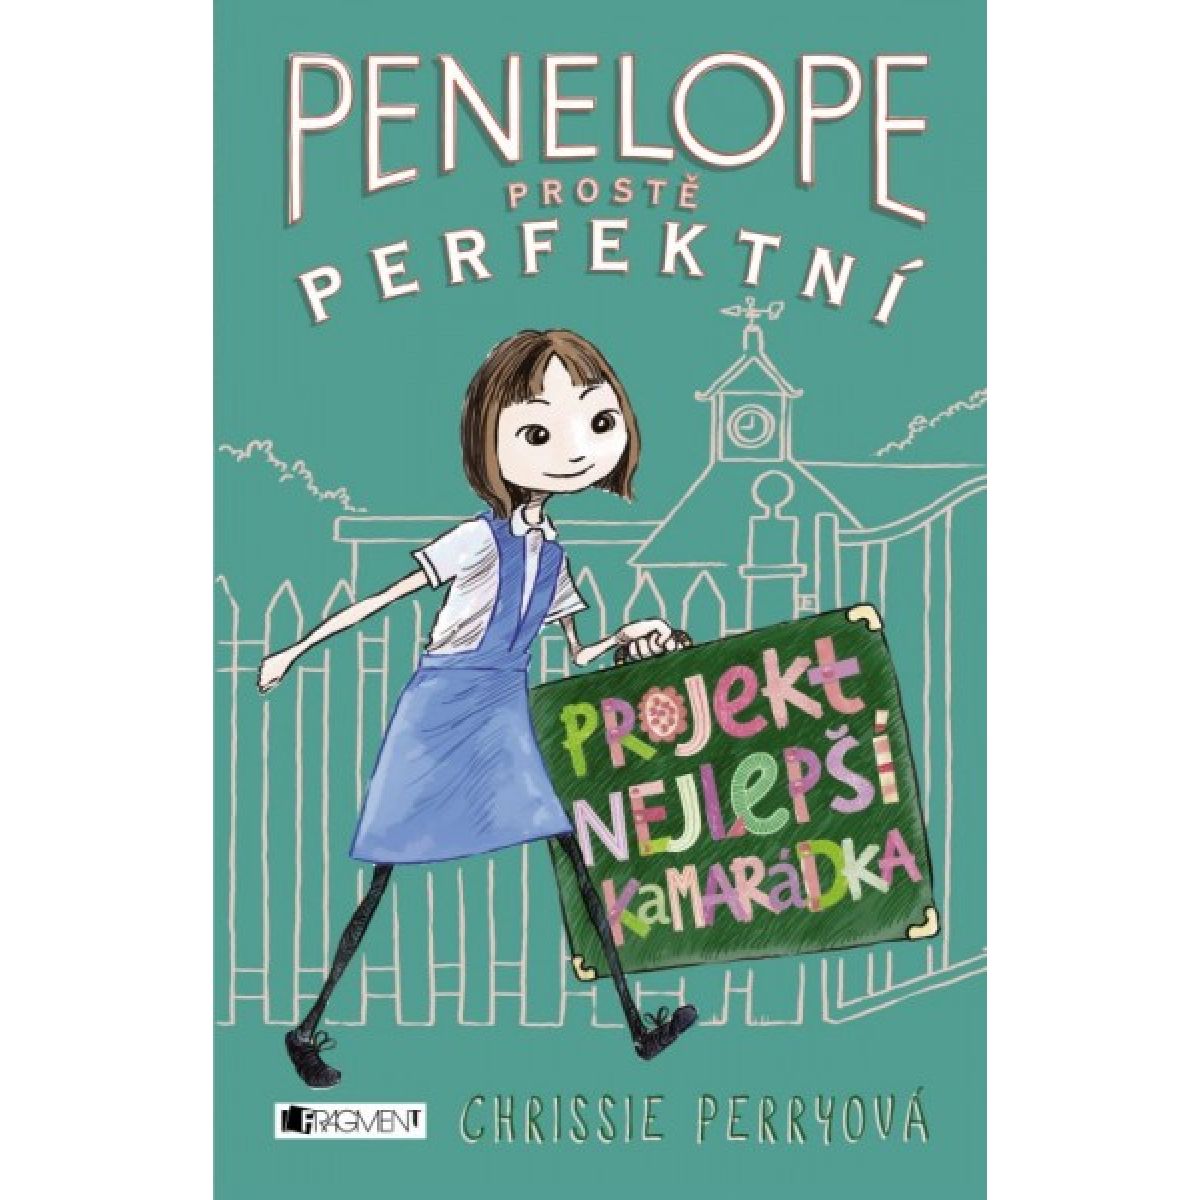 Penelope - proste perfektný: Projekt Najlepšia kamarátka